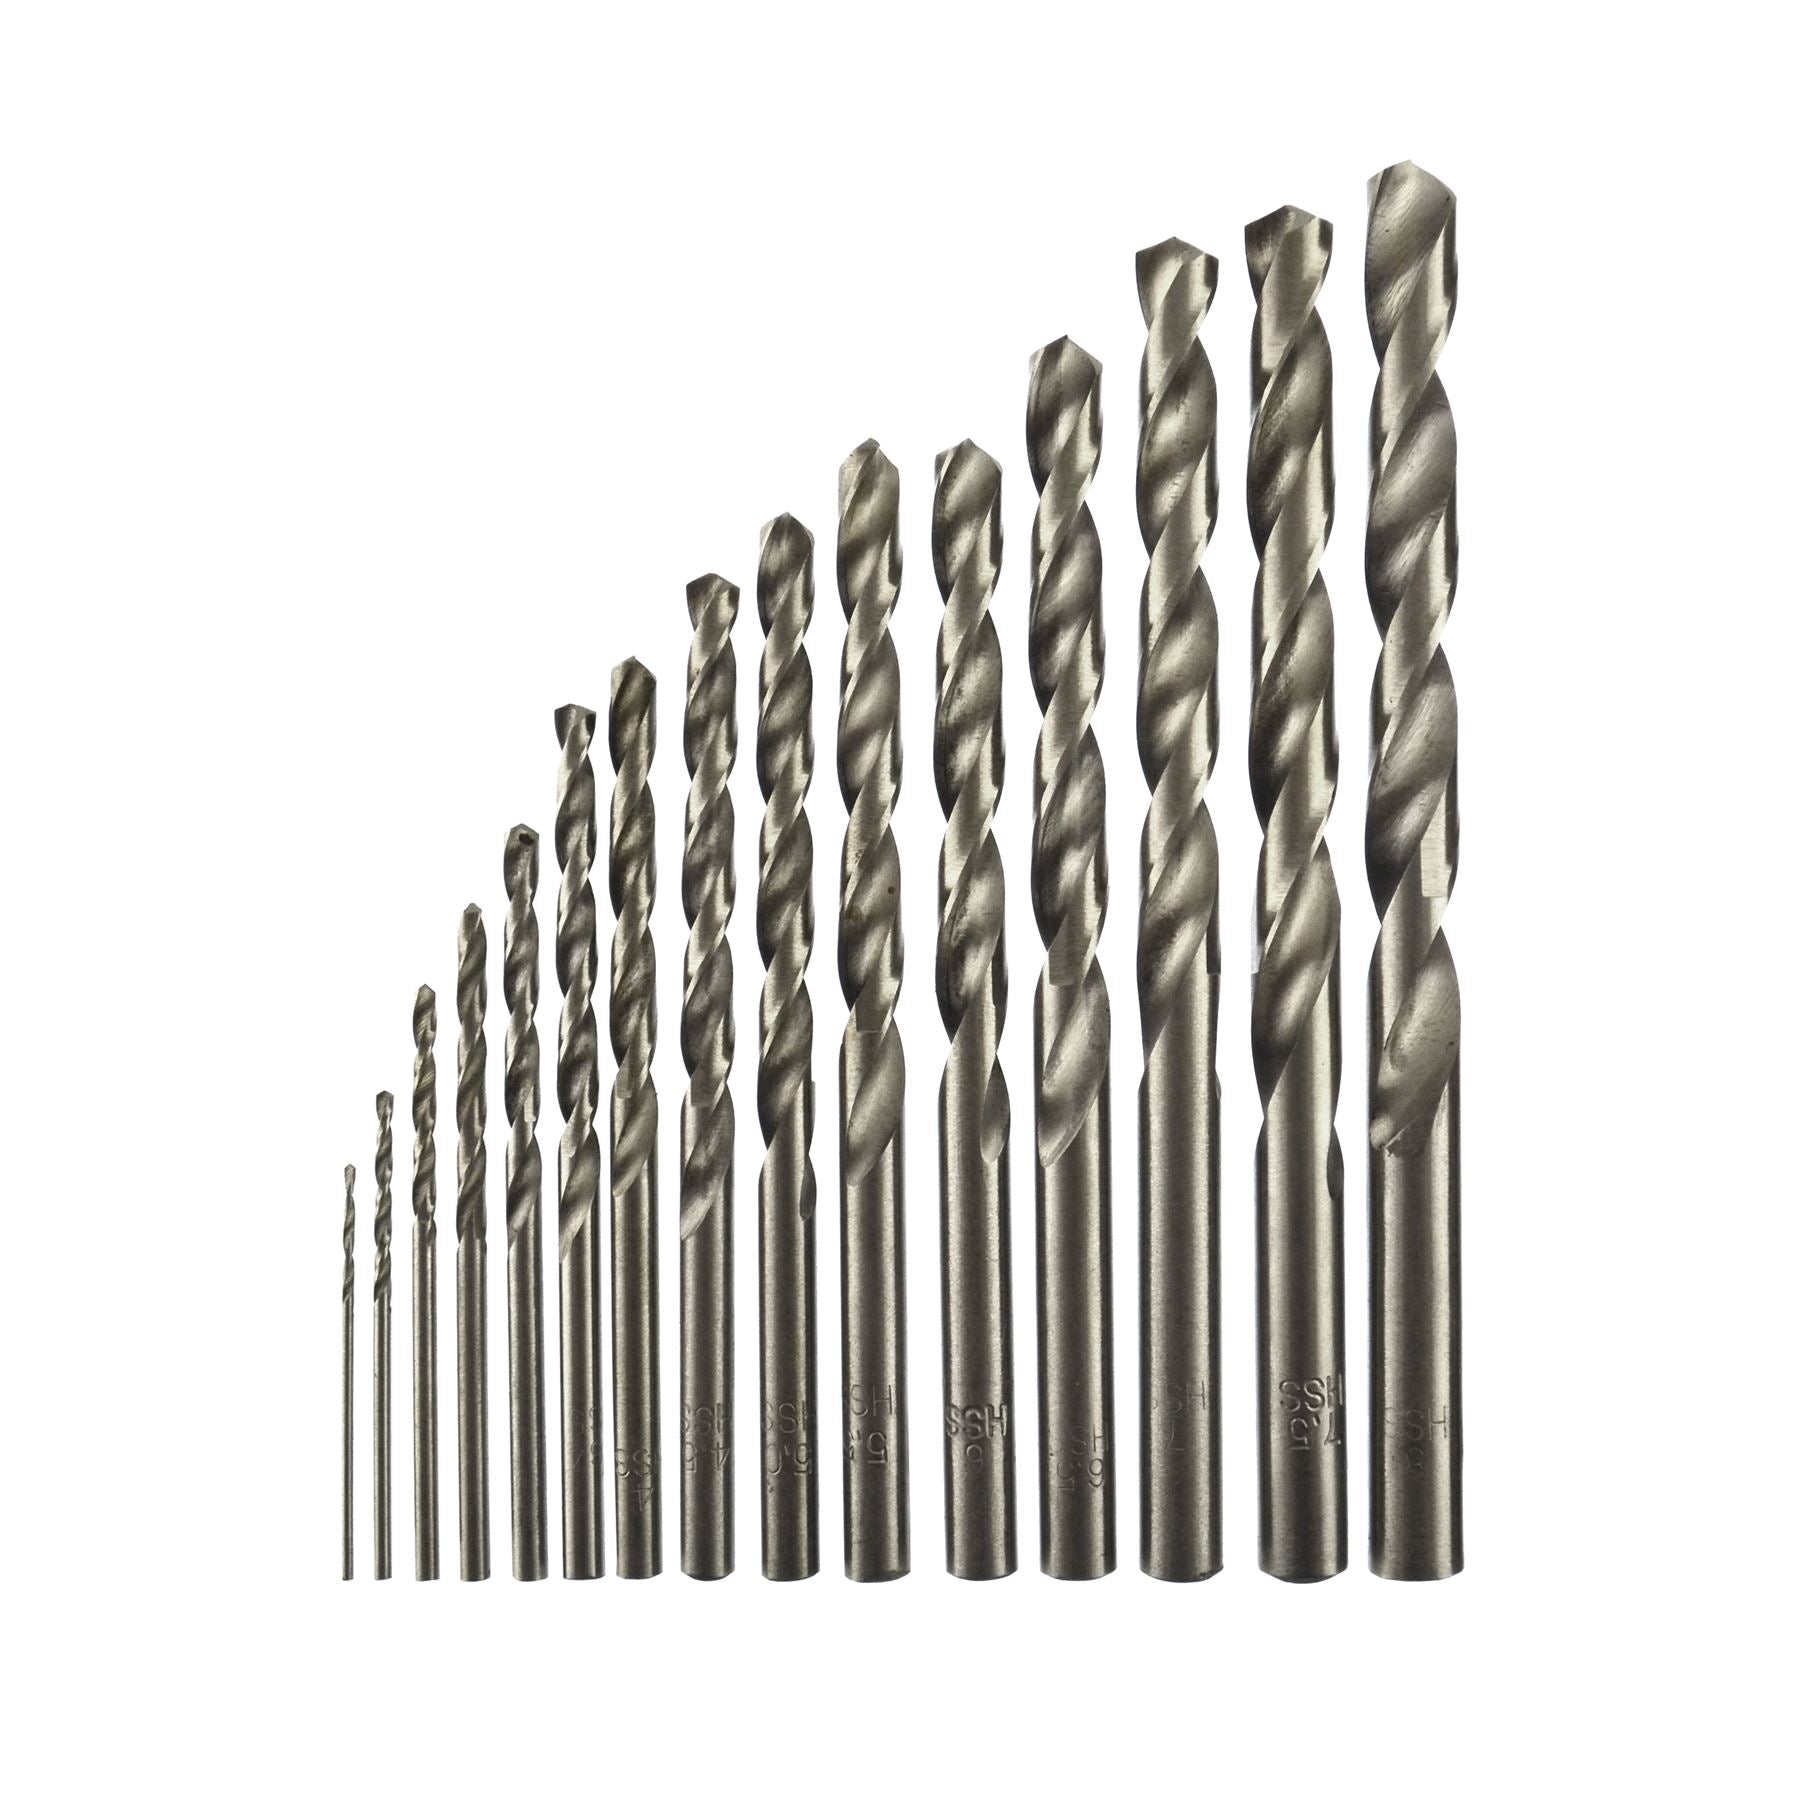 1 - 8mm 10pk HSS Metric Steel Split Point Drill Bits for Metal Steel Wood